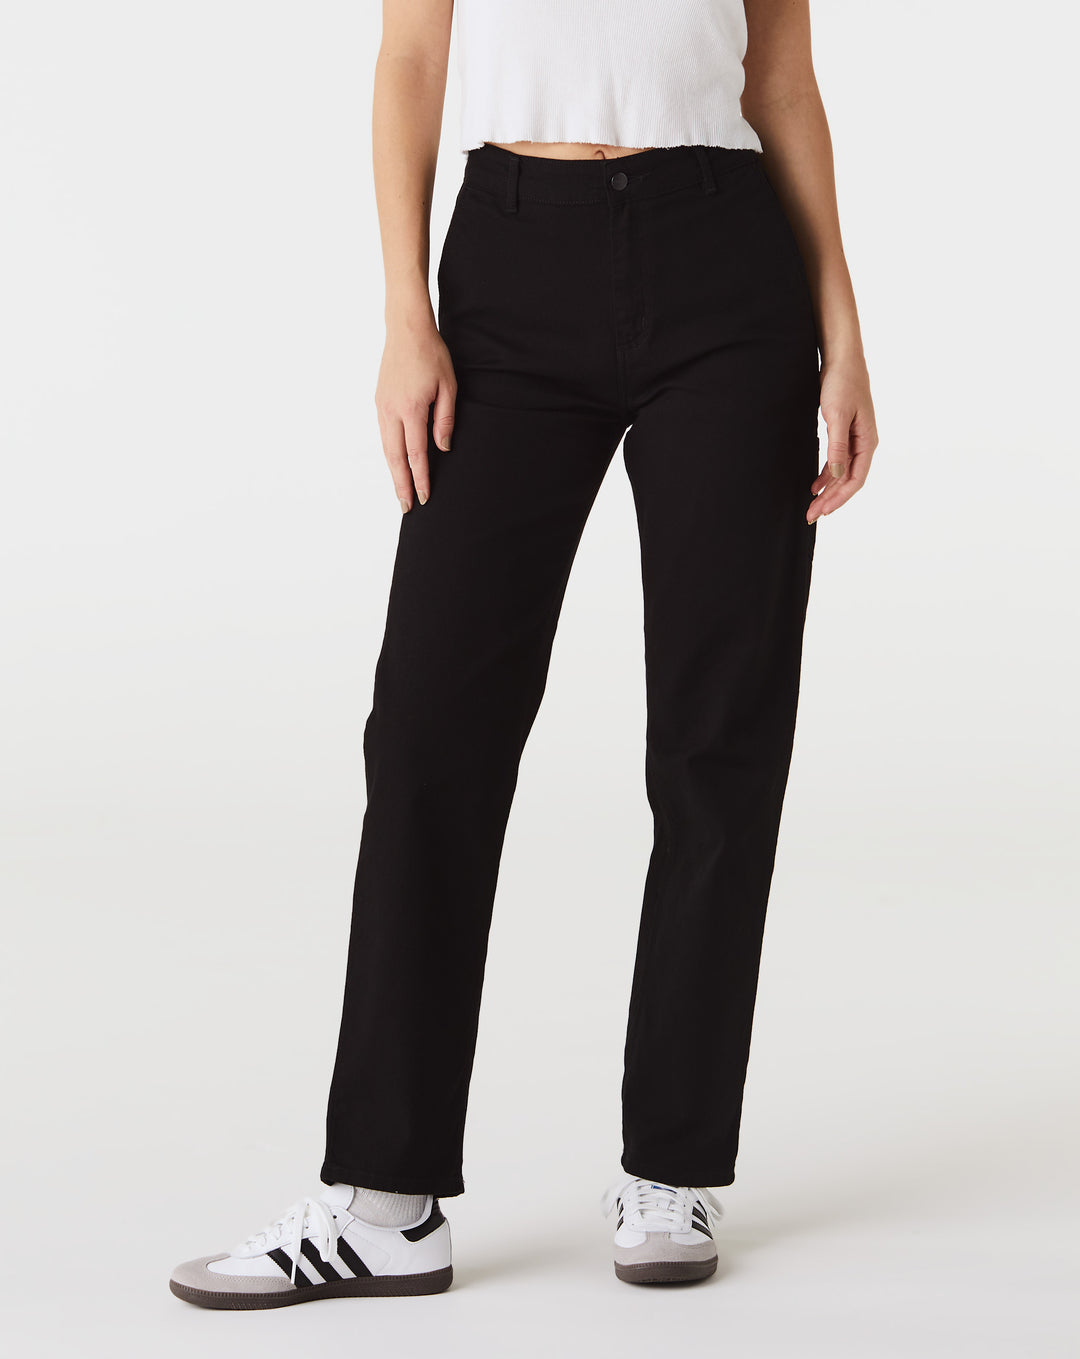 Carhartt WIP Women's Pierce Pant Black Size 25, Black Cotton Canvas